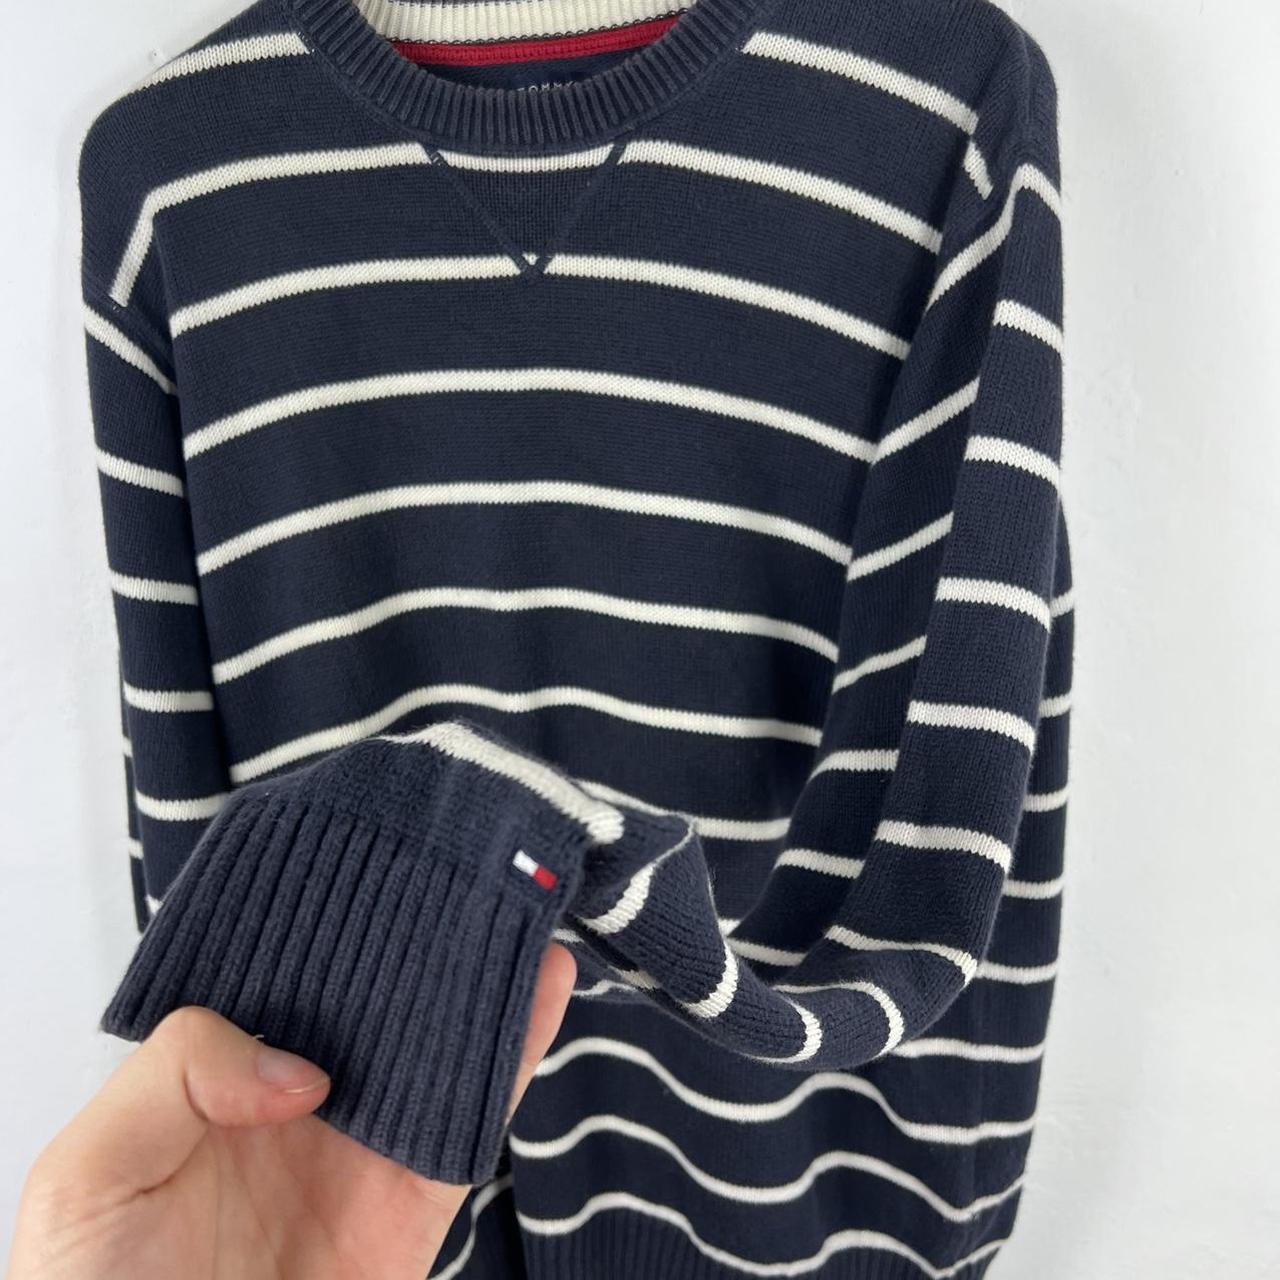 Tommy Hilfiger knit medium / large